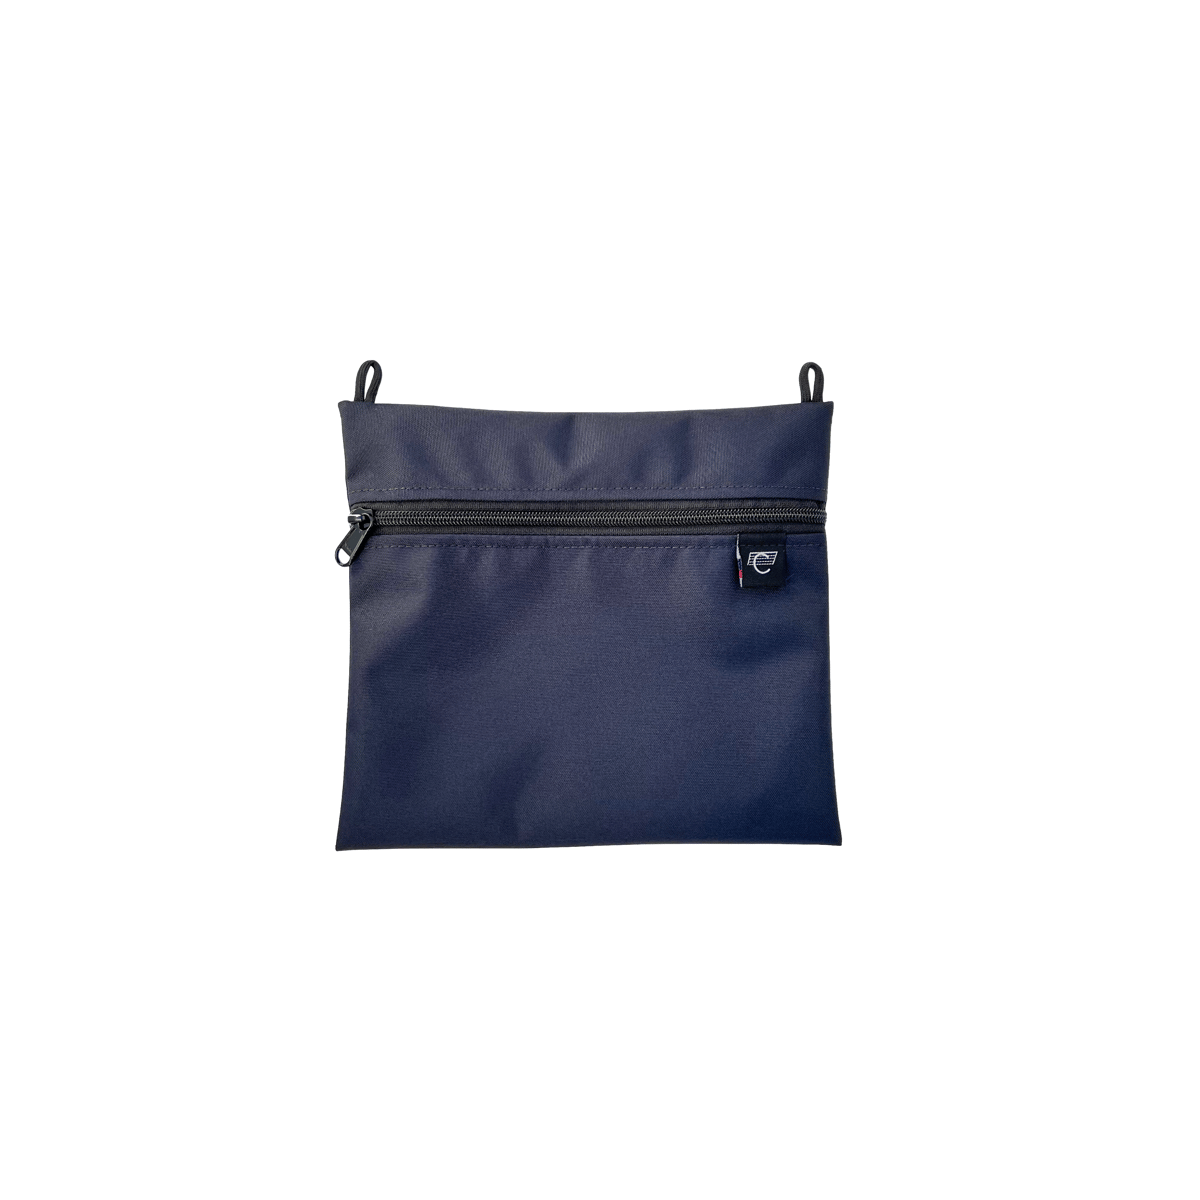 Image of Dark navy blue kit bag